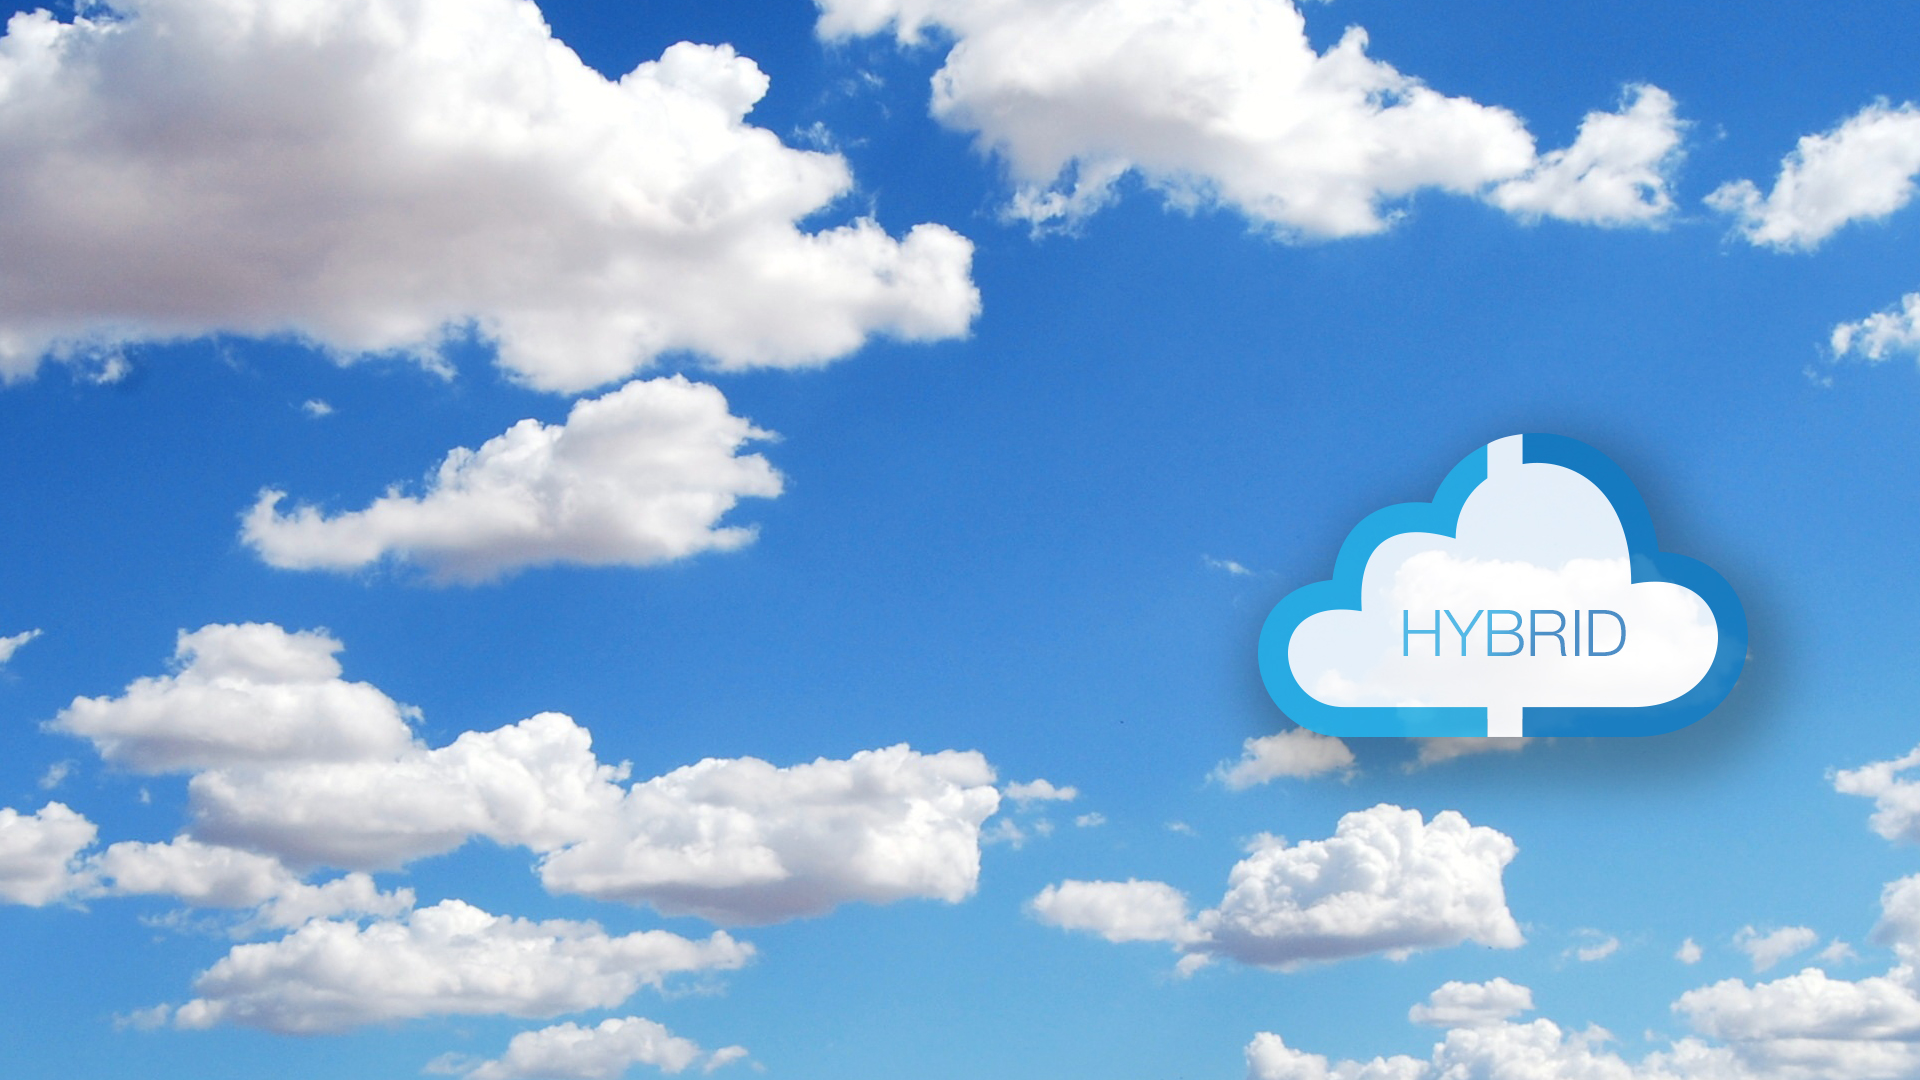 hybrid logo with sky background